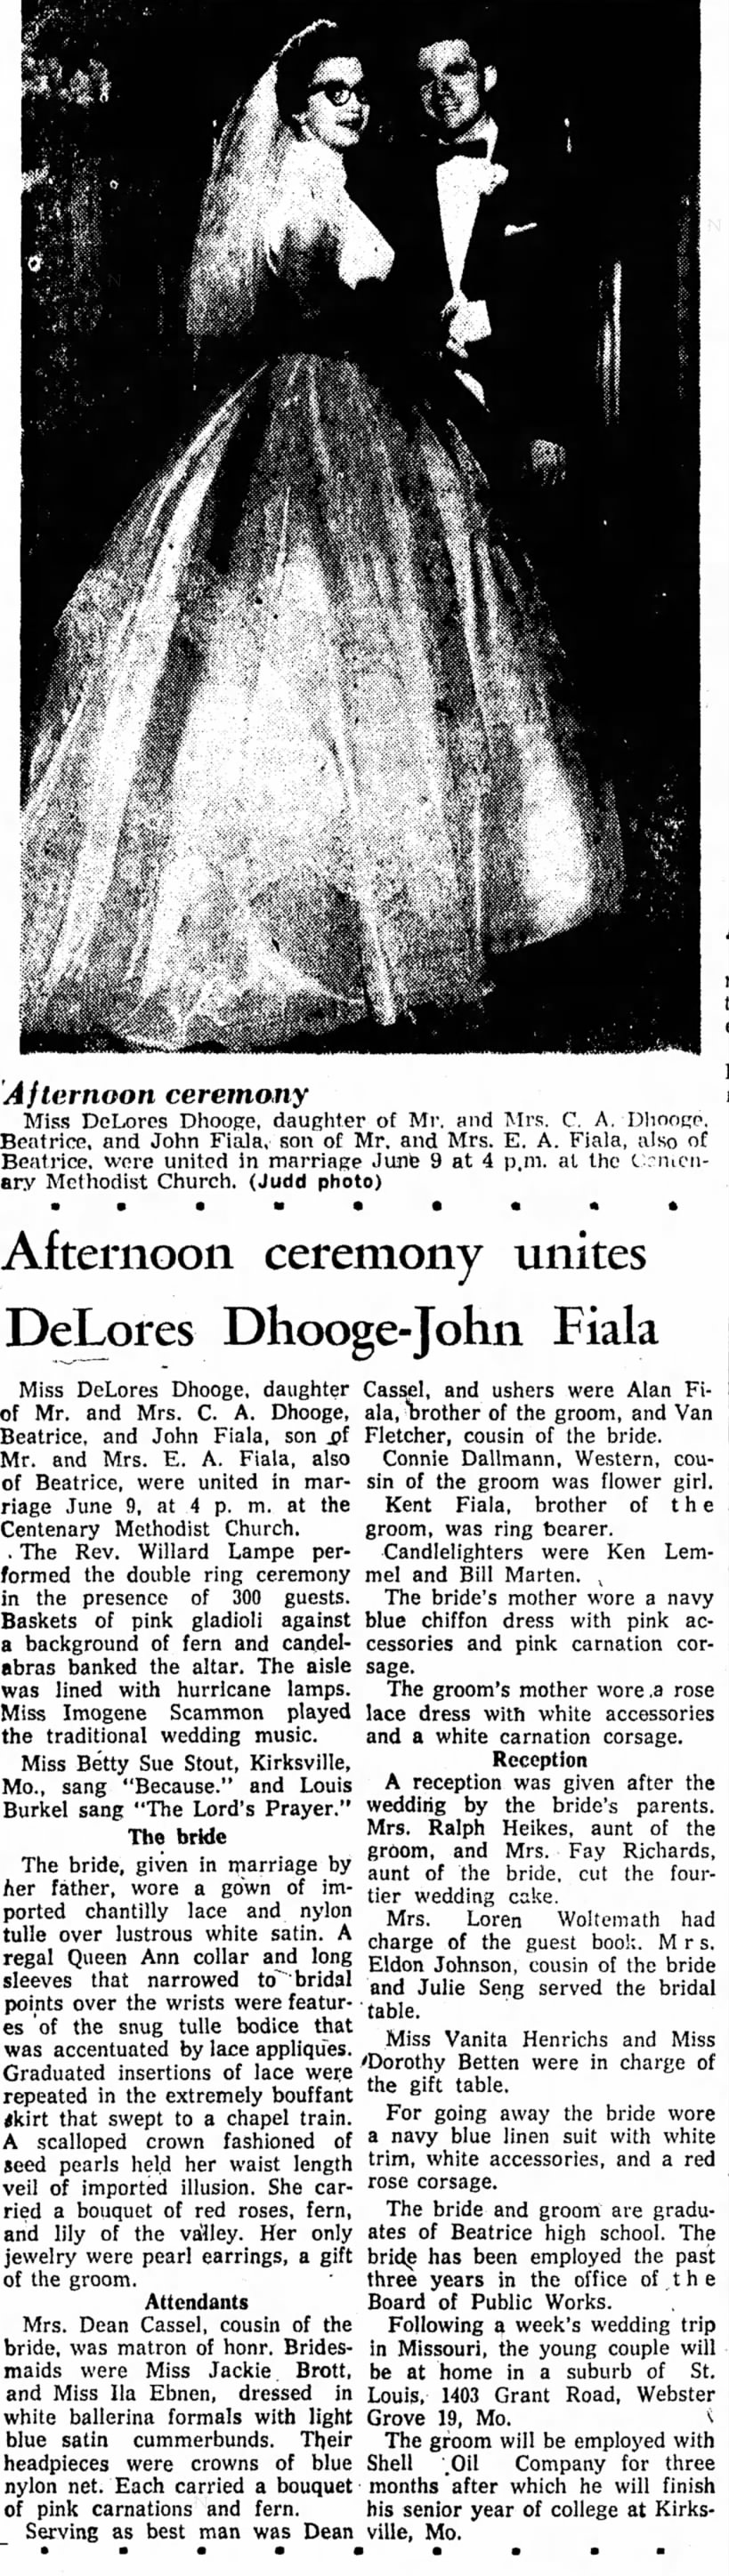 Beatrice Daily Sun (Beatrice, Nebraska) 30-June-1957